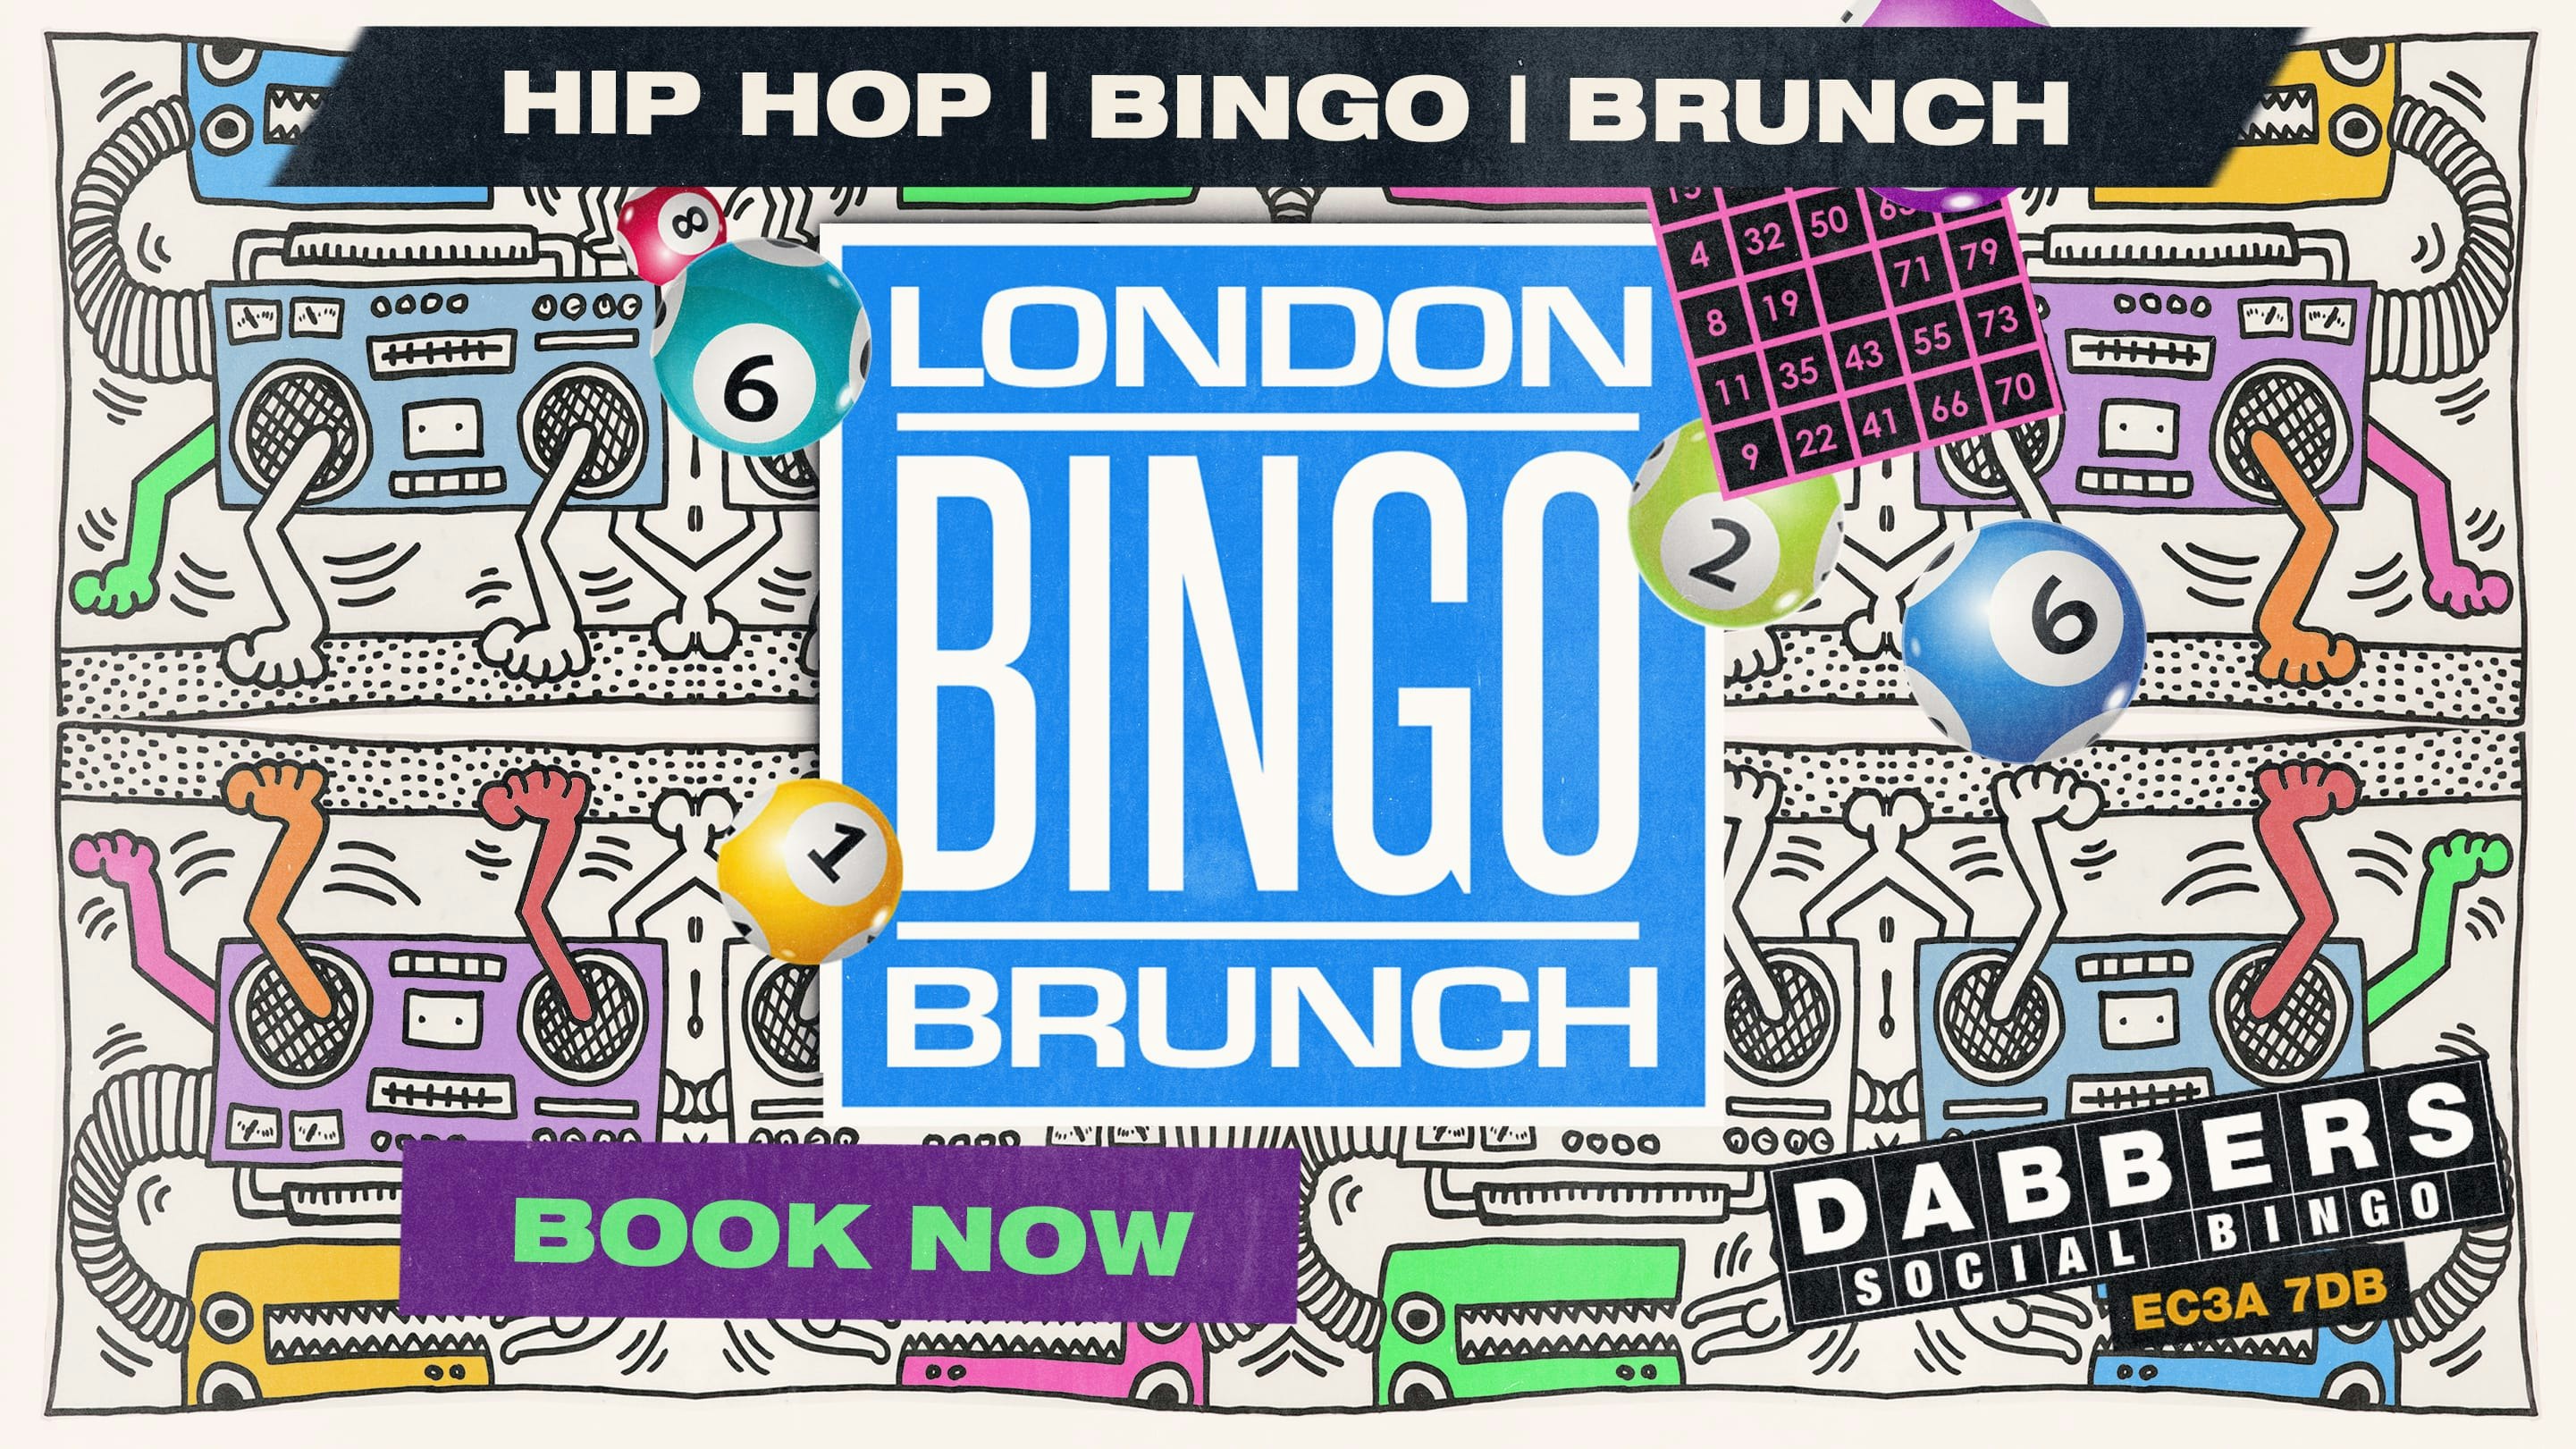 London Bingo Brunch: Hip Hop Hits Only!